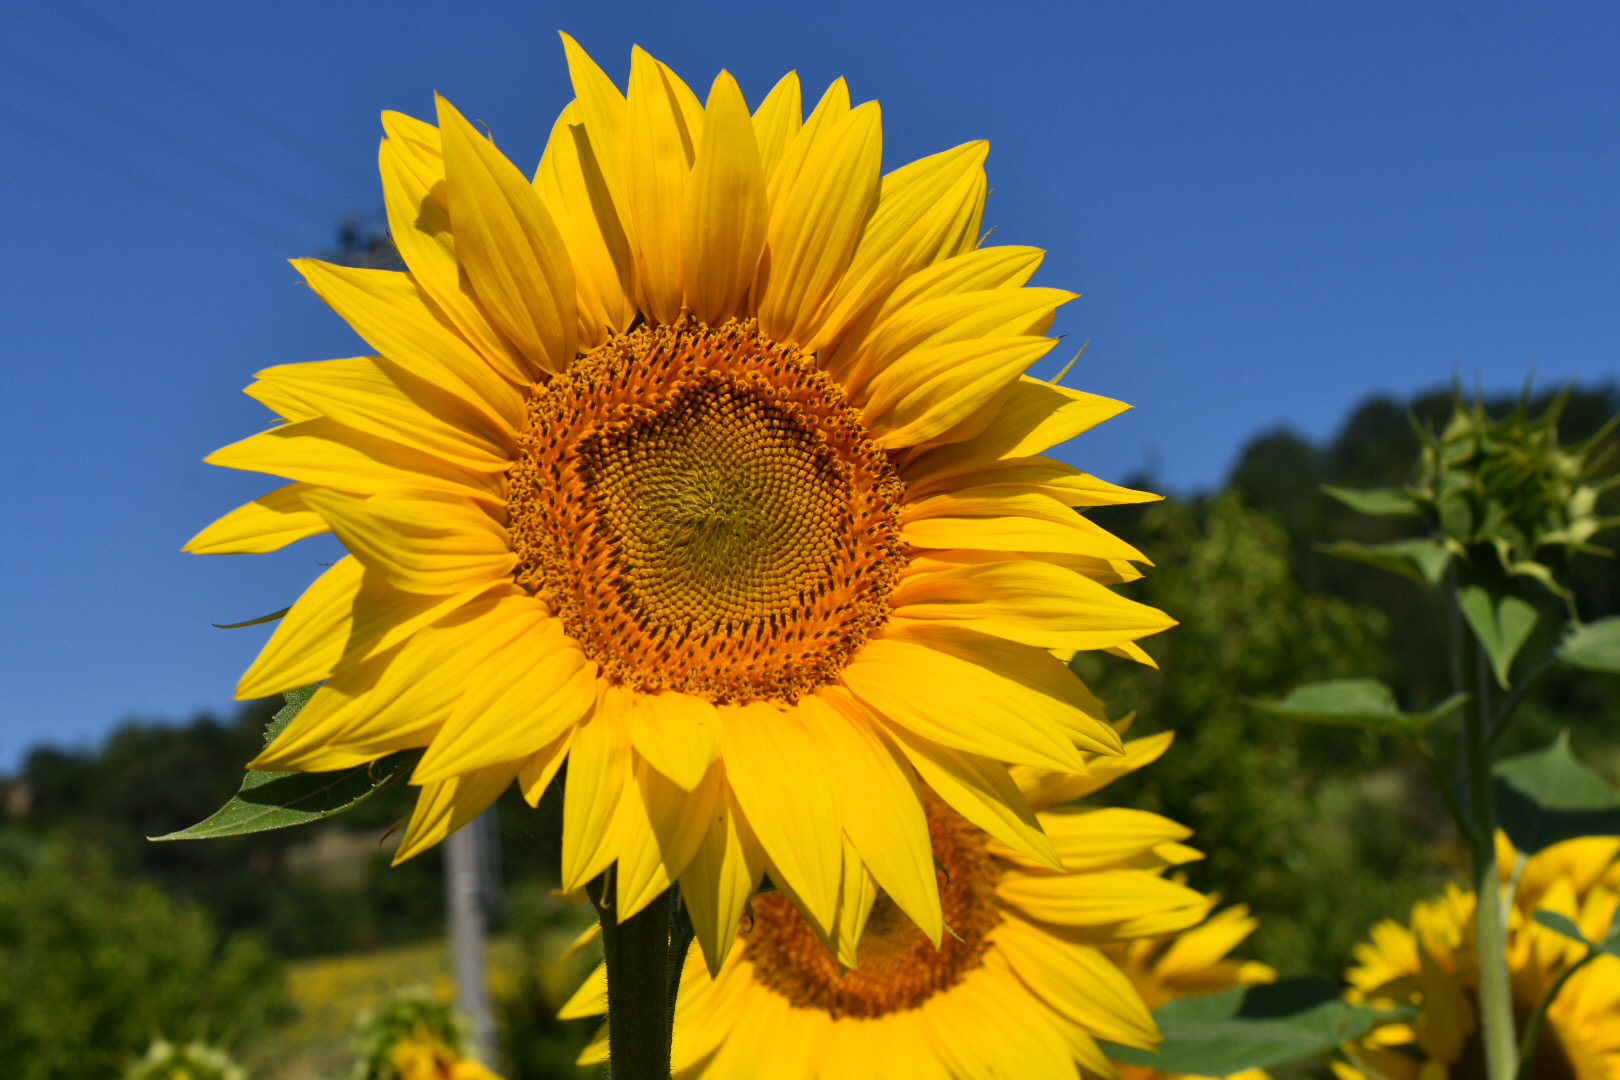 The sunflower that brings joy...